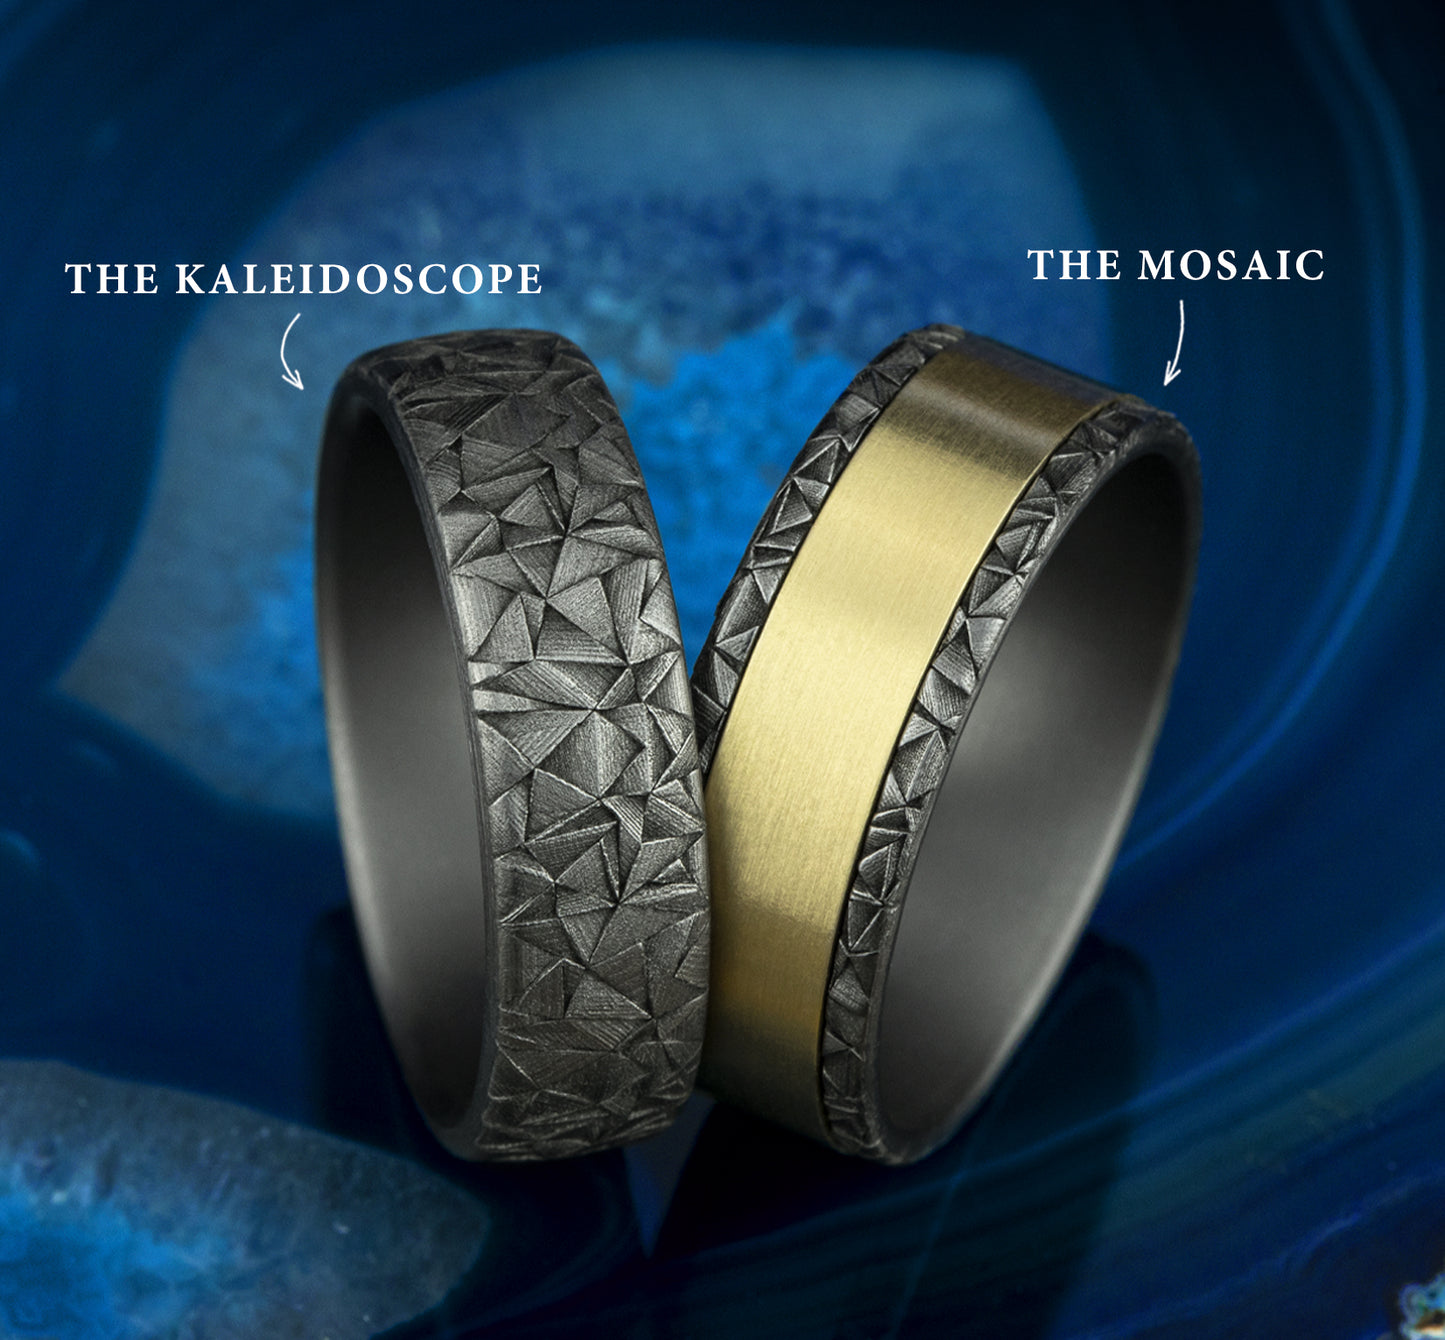 THE KALEIDOSCOPE